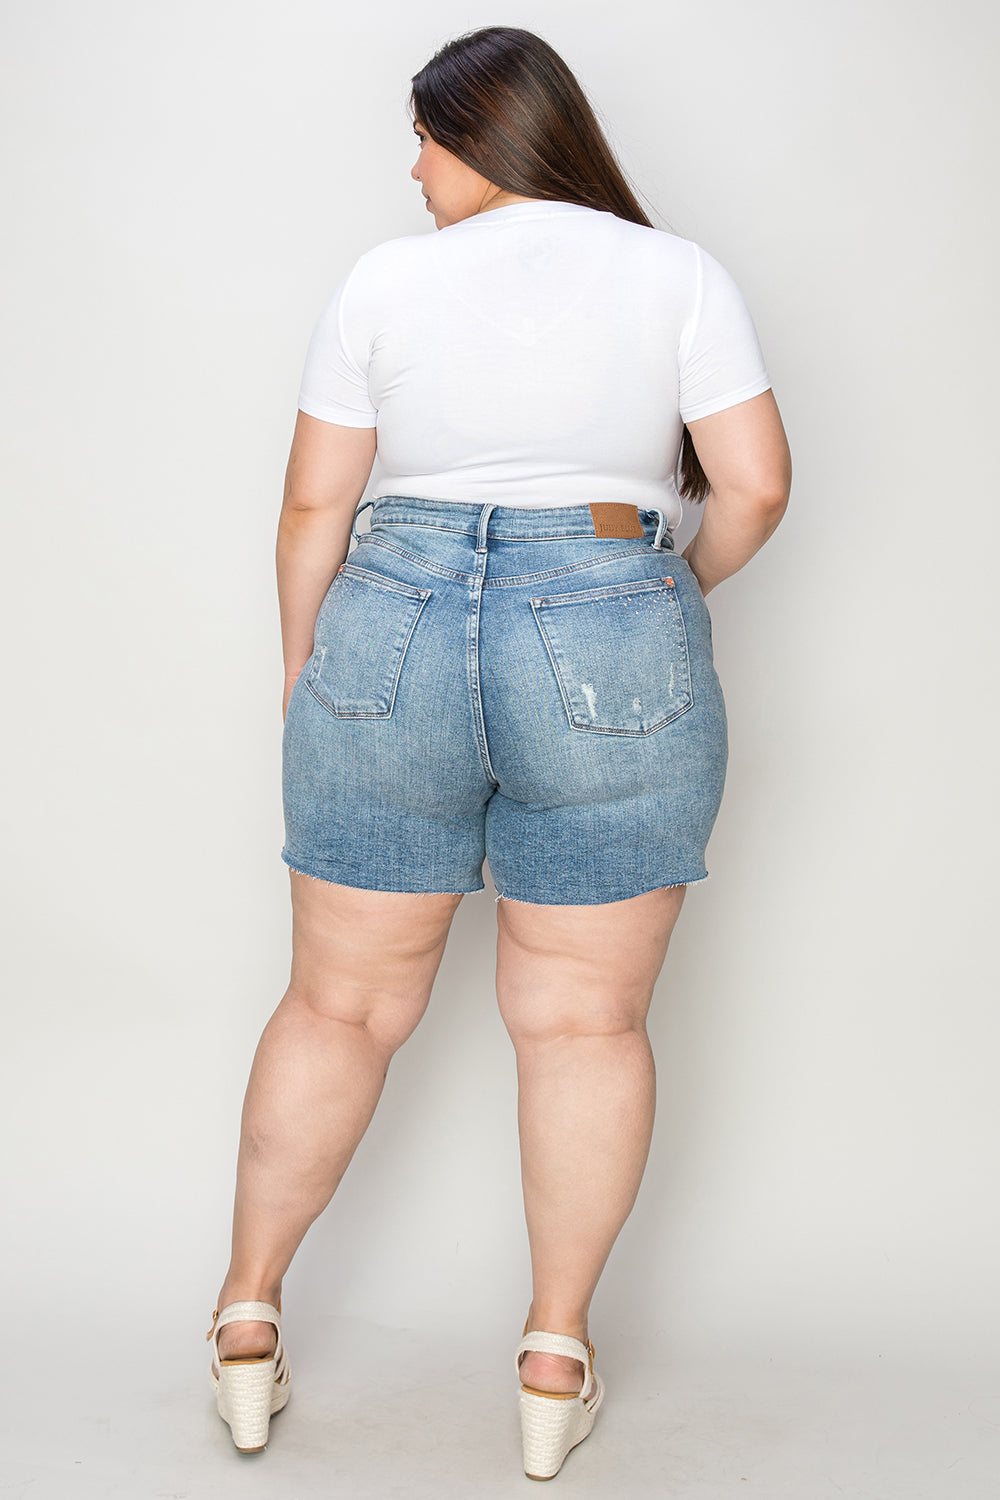 Judy Blue Full Size High Waist Raw Hem Denim Shorts